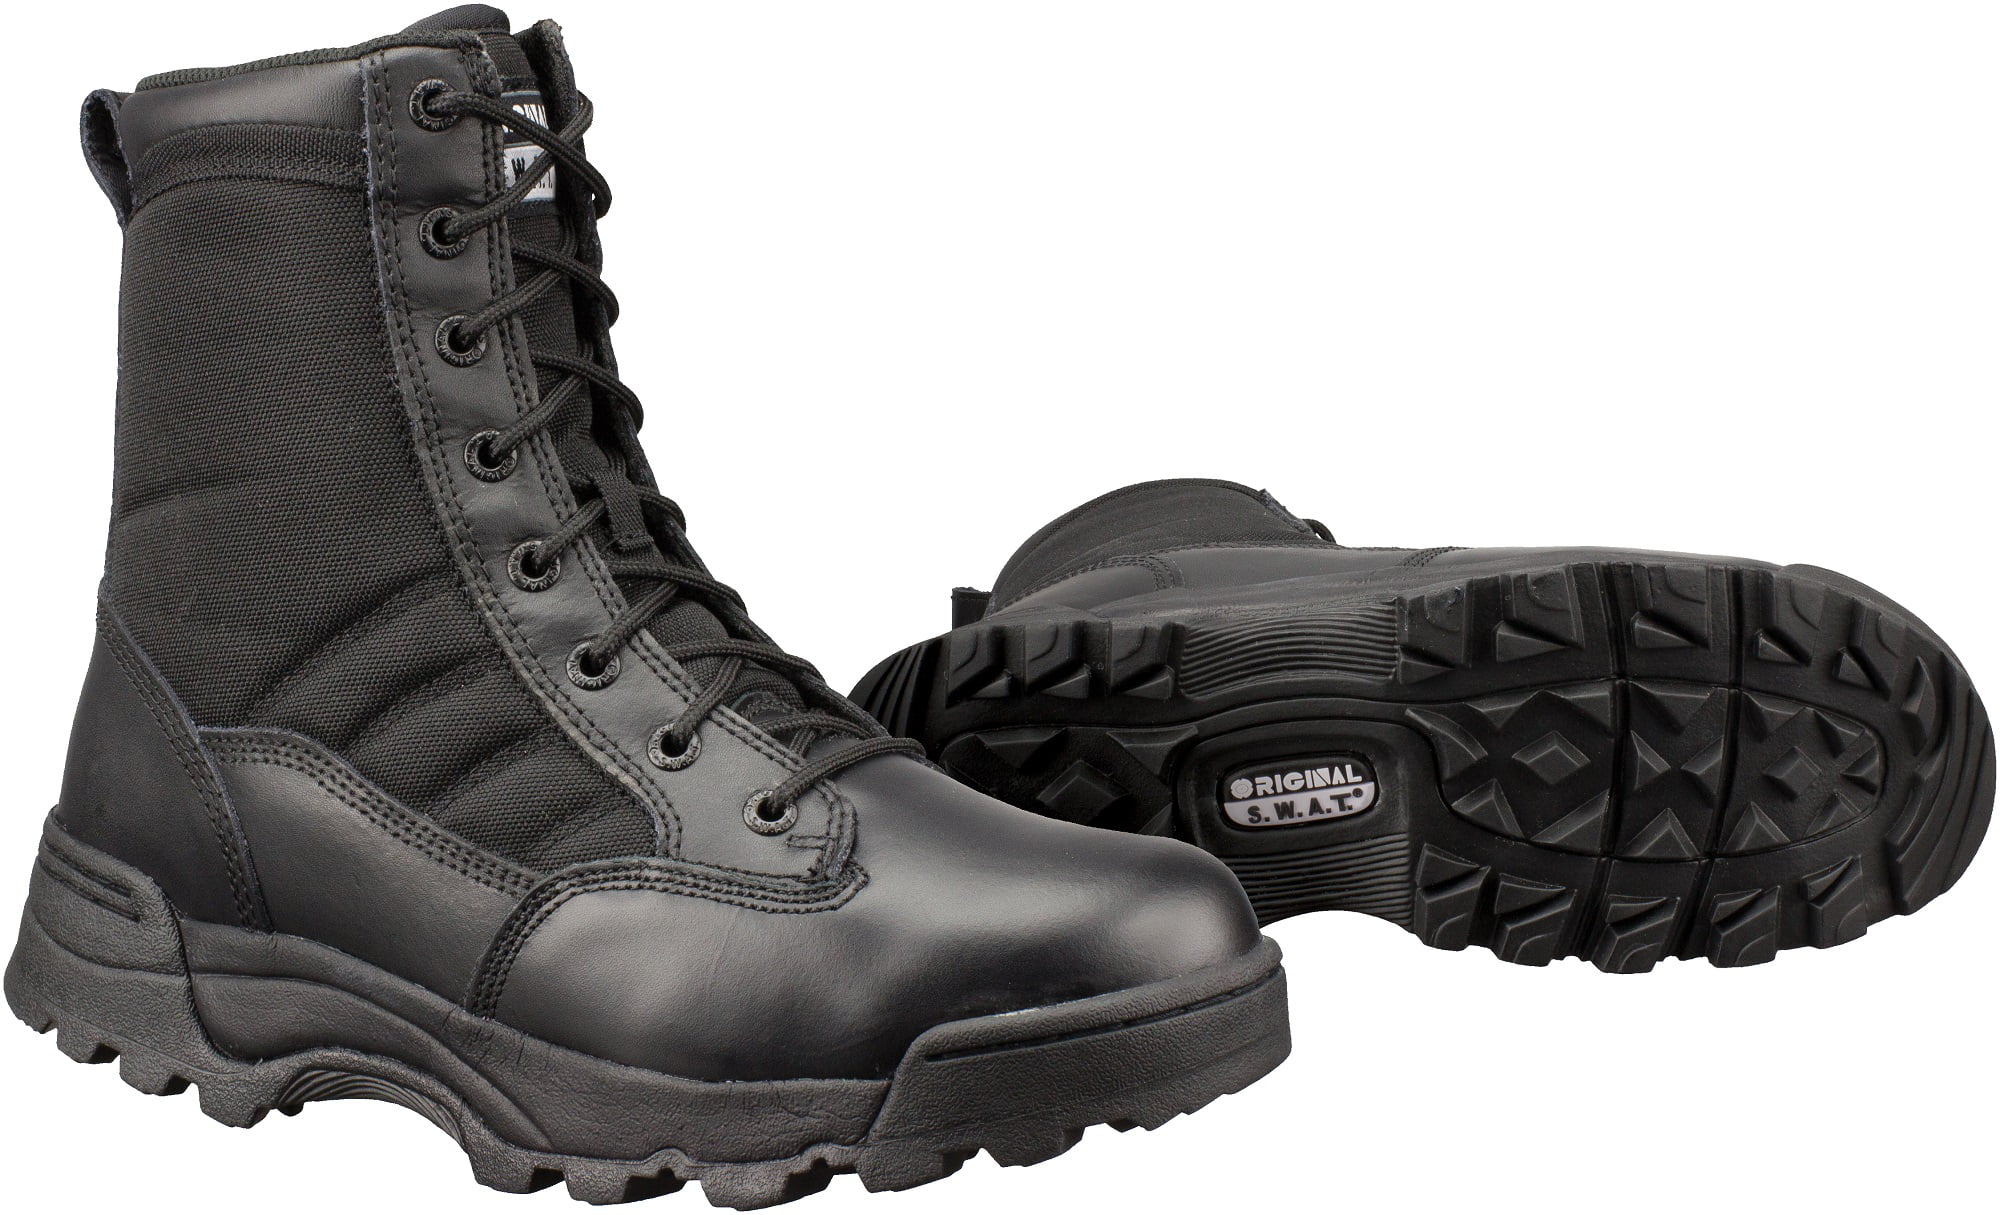 lightweight black combat boots